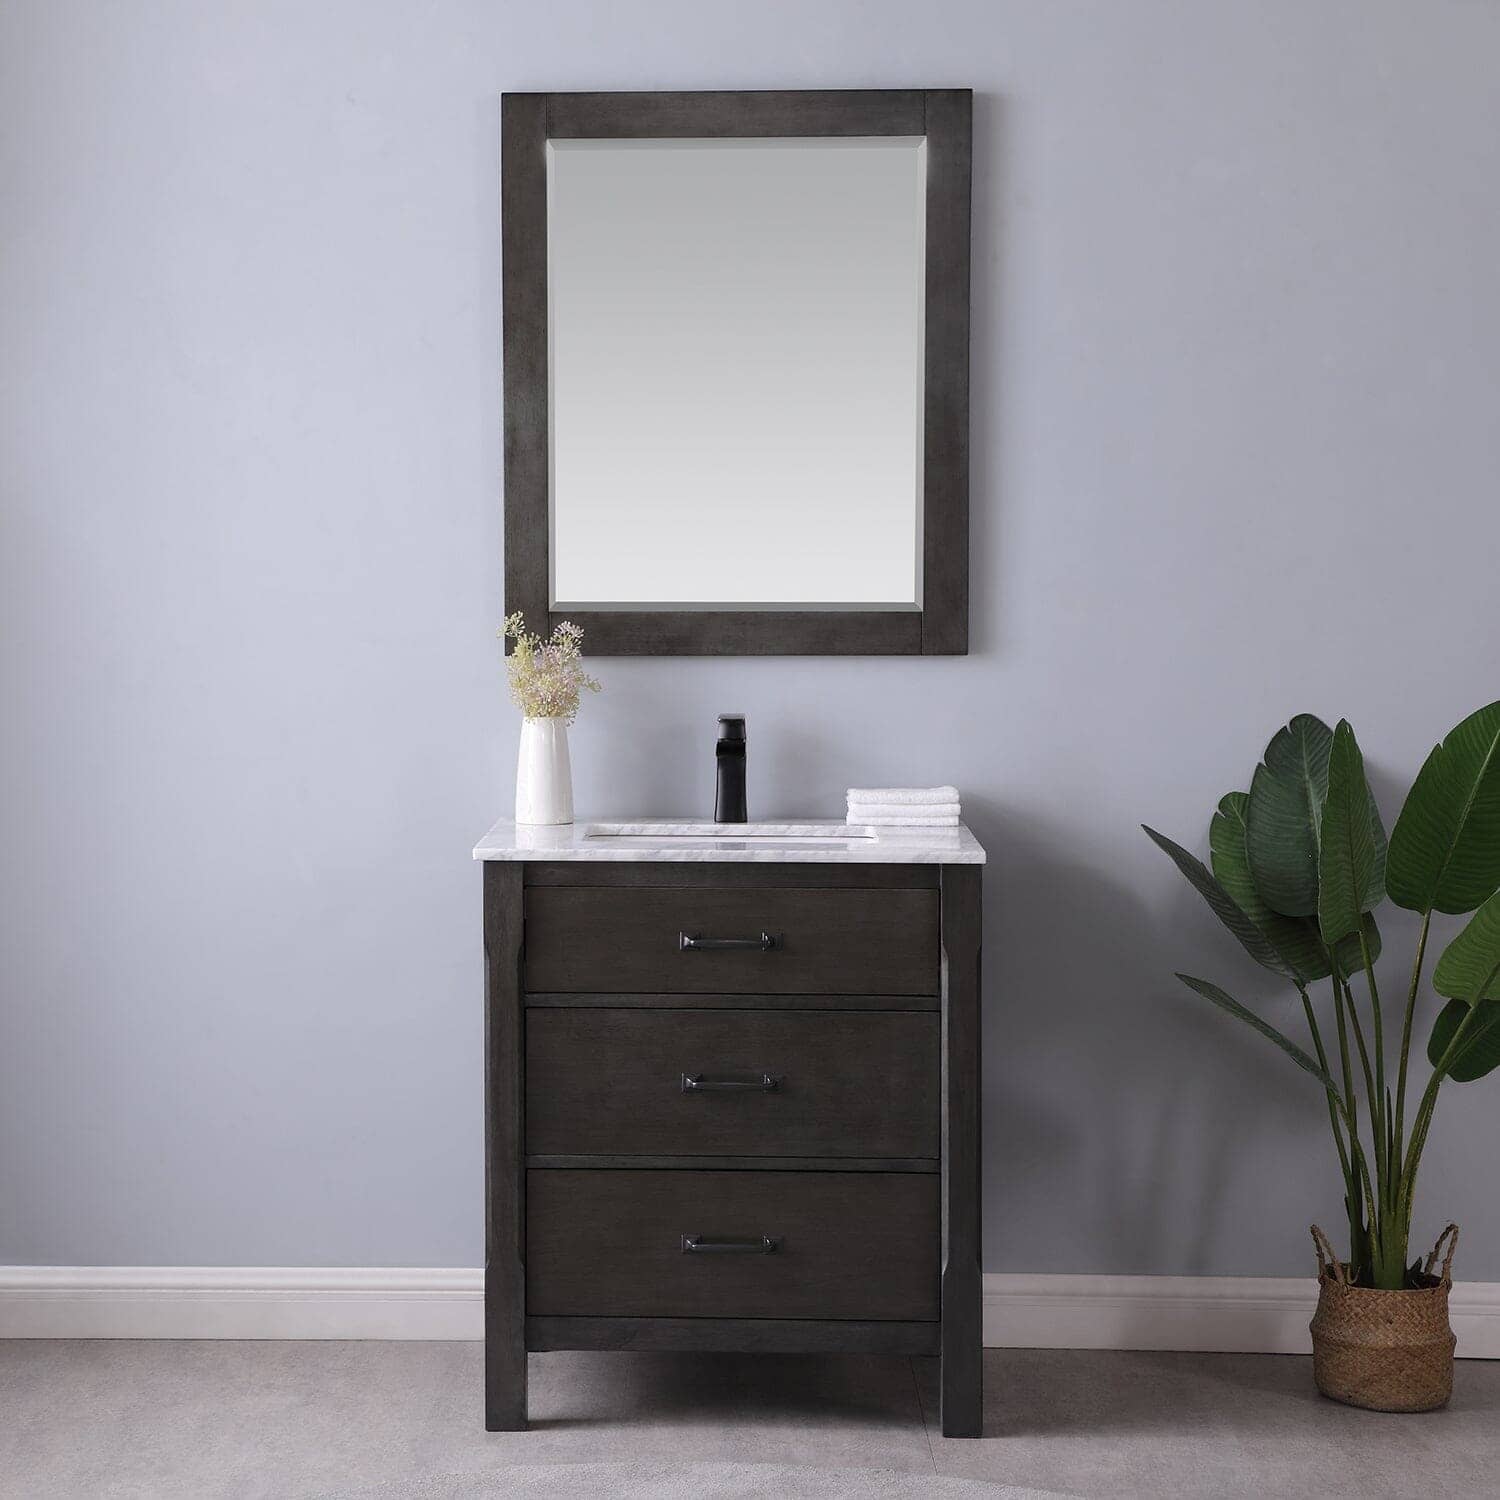 Bathroom Mirror - Altair Maribella 28W x 36H -535030-MIR-RL